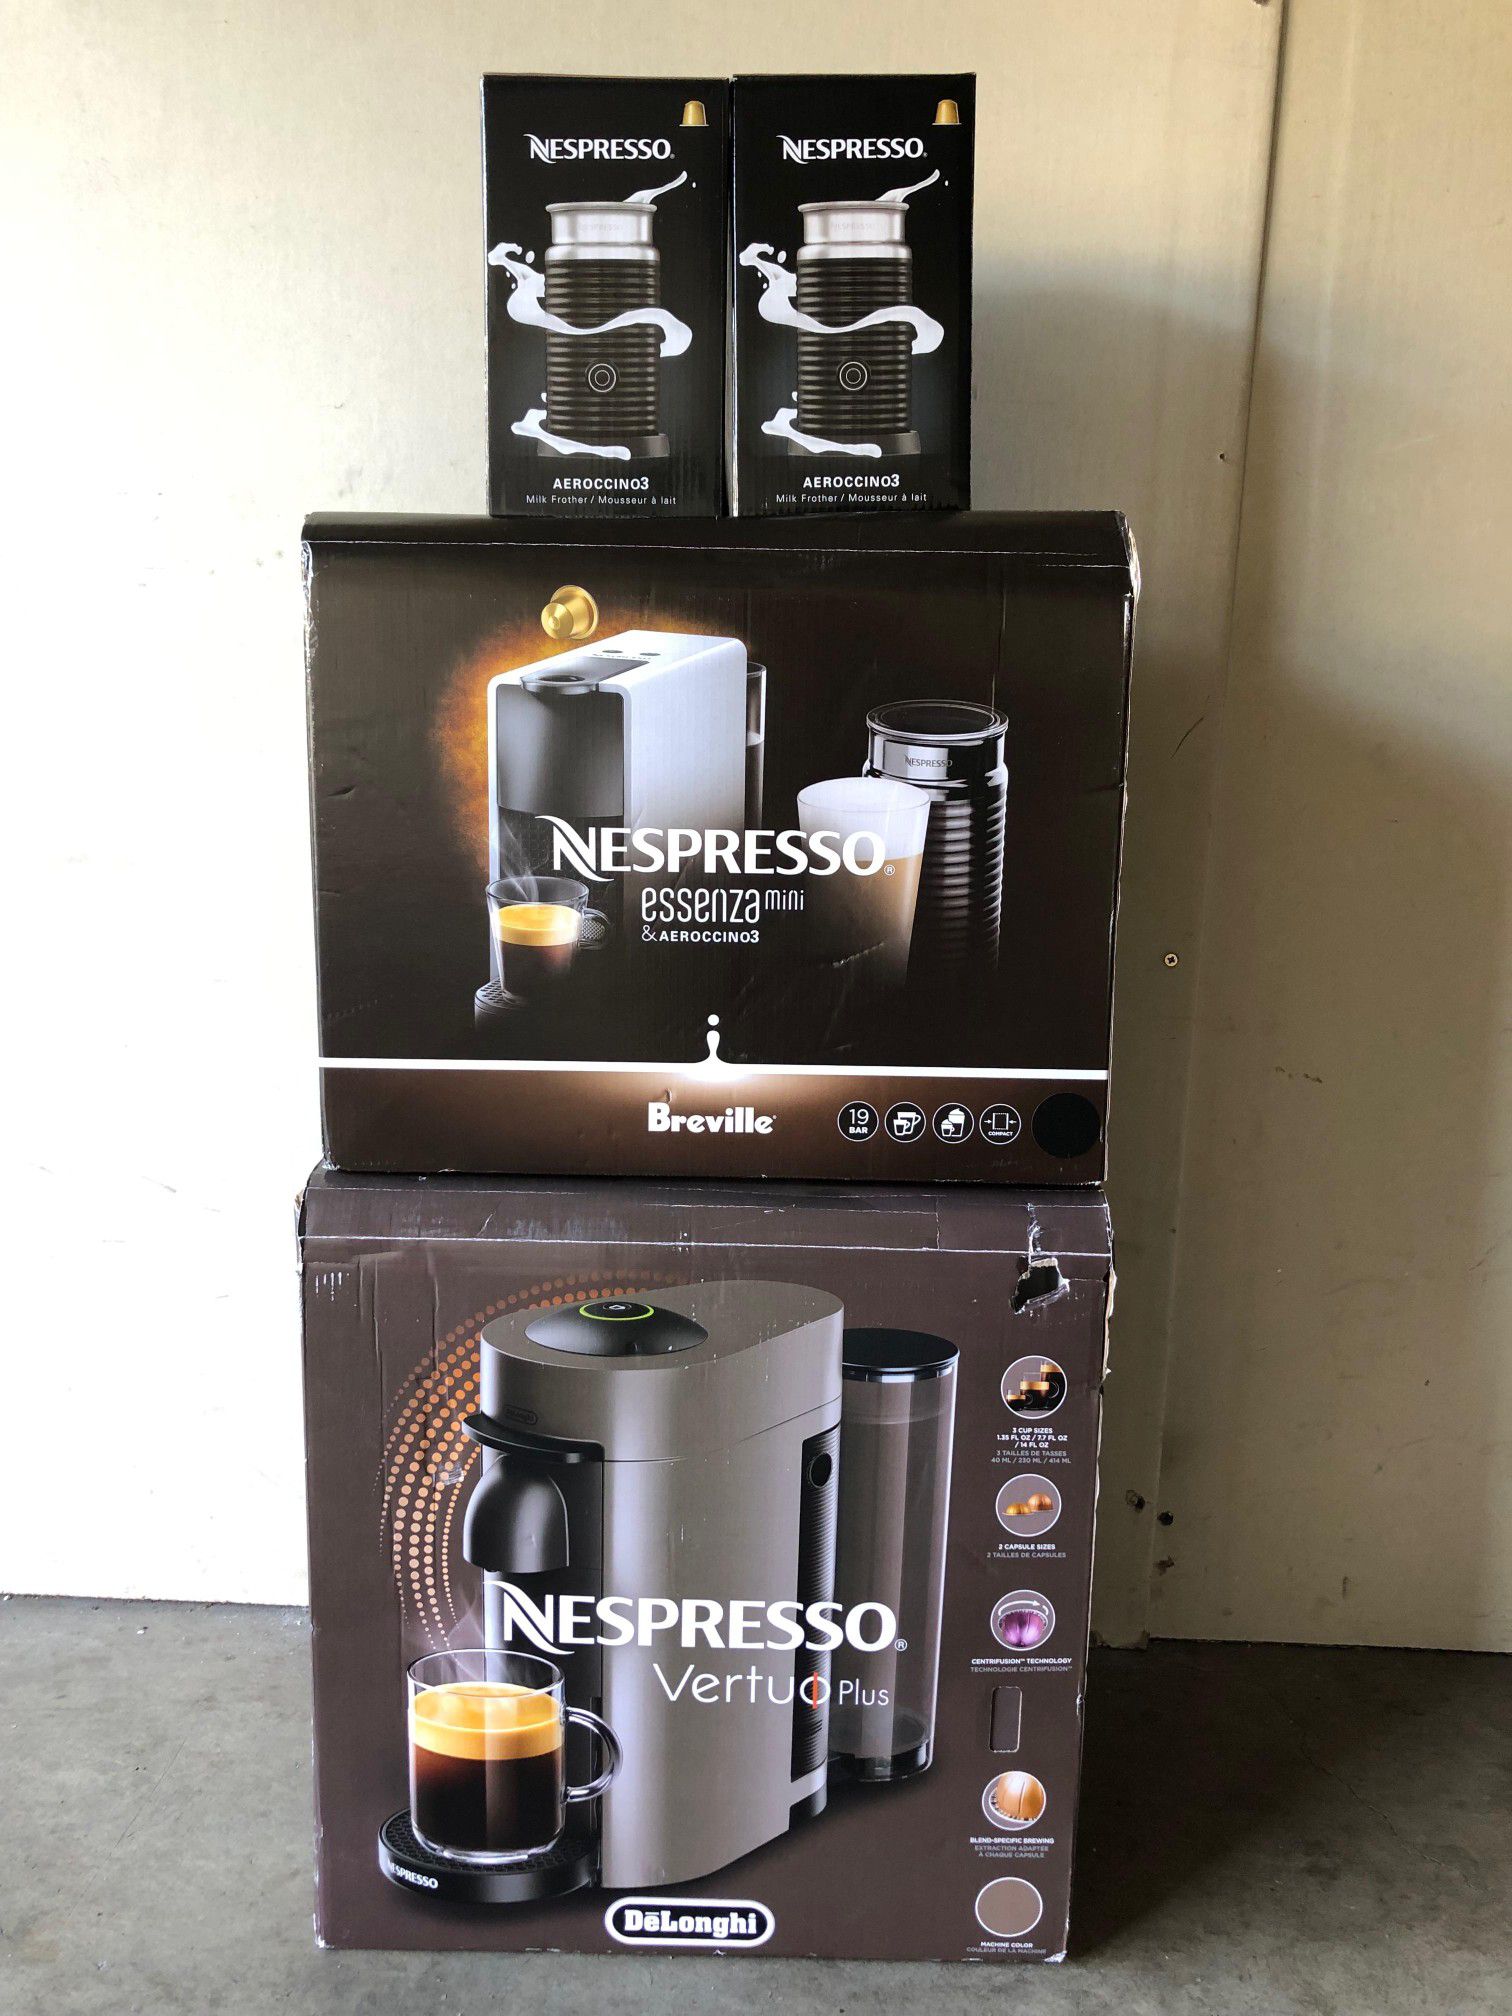 DELONGHI BREVILLE NESPRESSO CAFE COFFEE ESPRESSO FROTHER MAKERS!!!